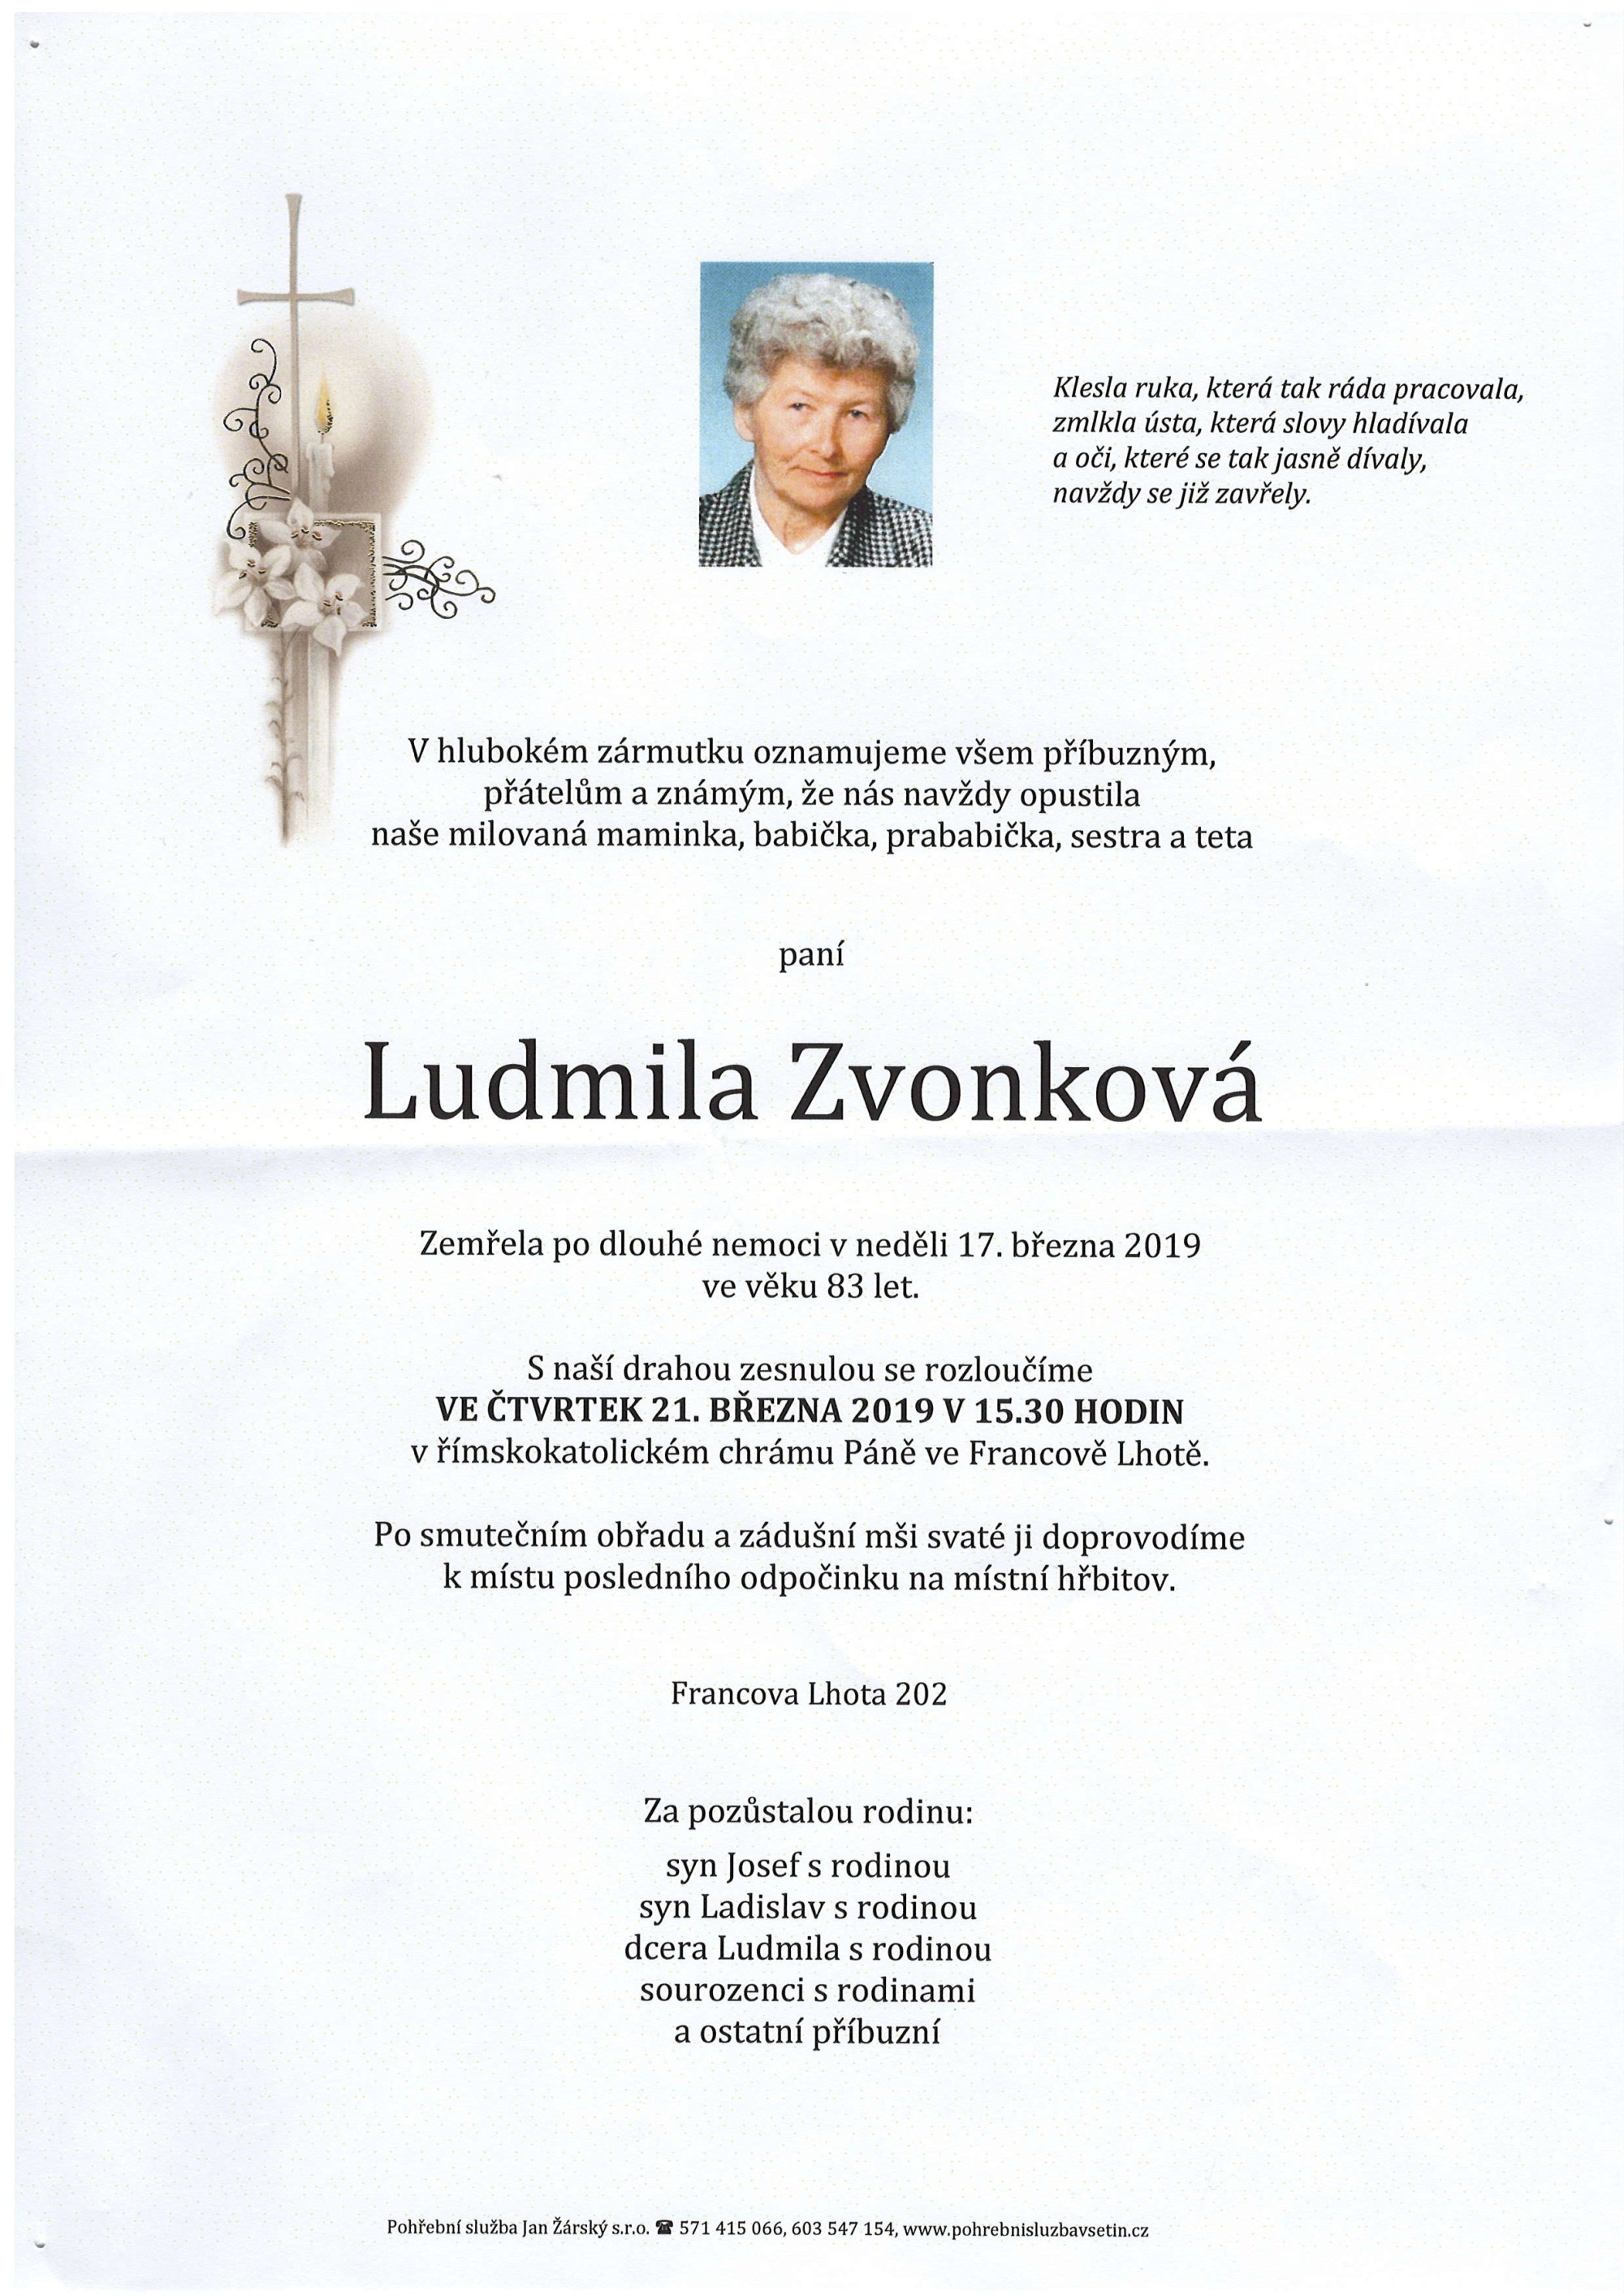 Ludmila Zvonková